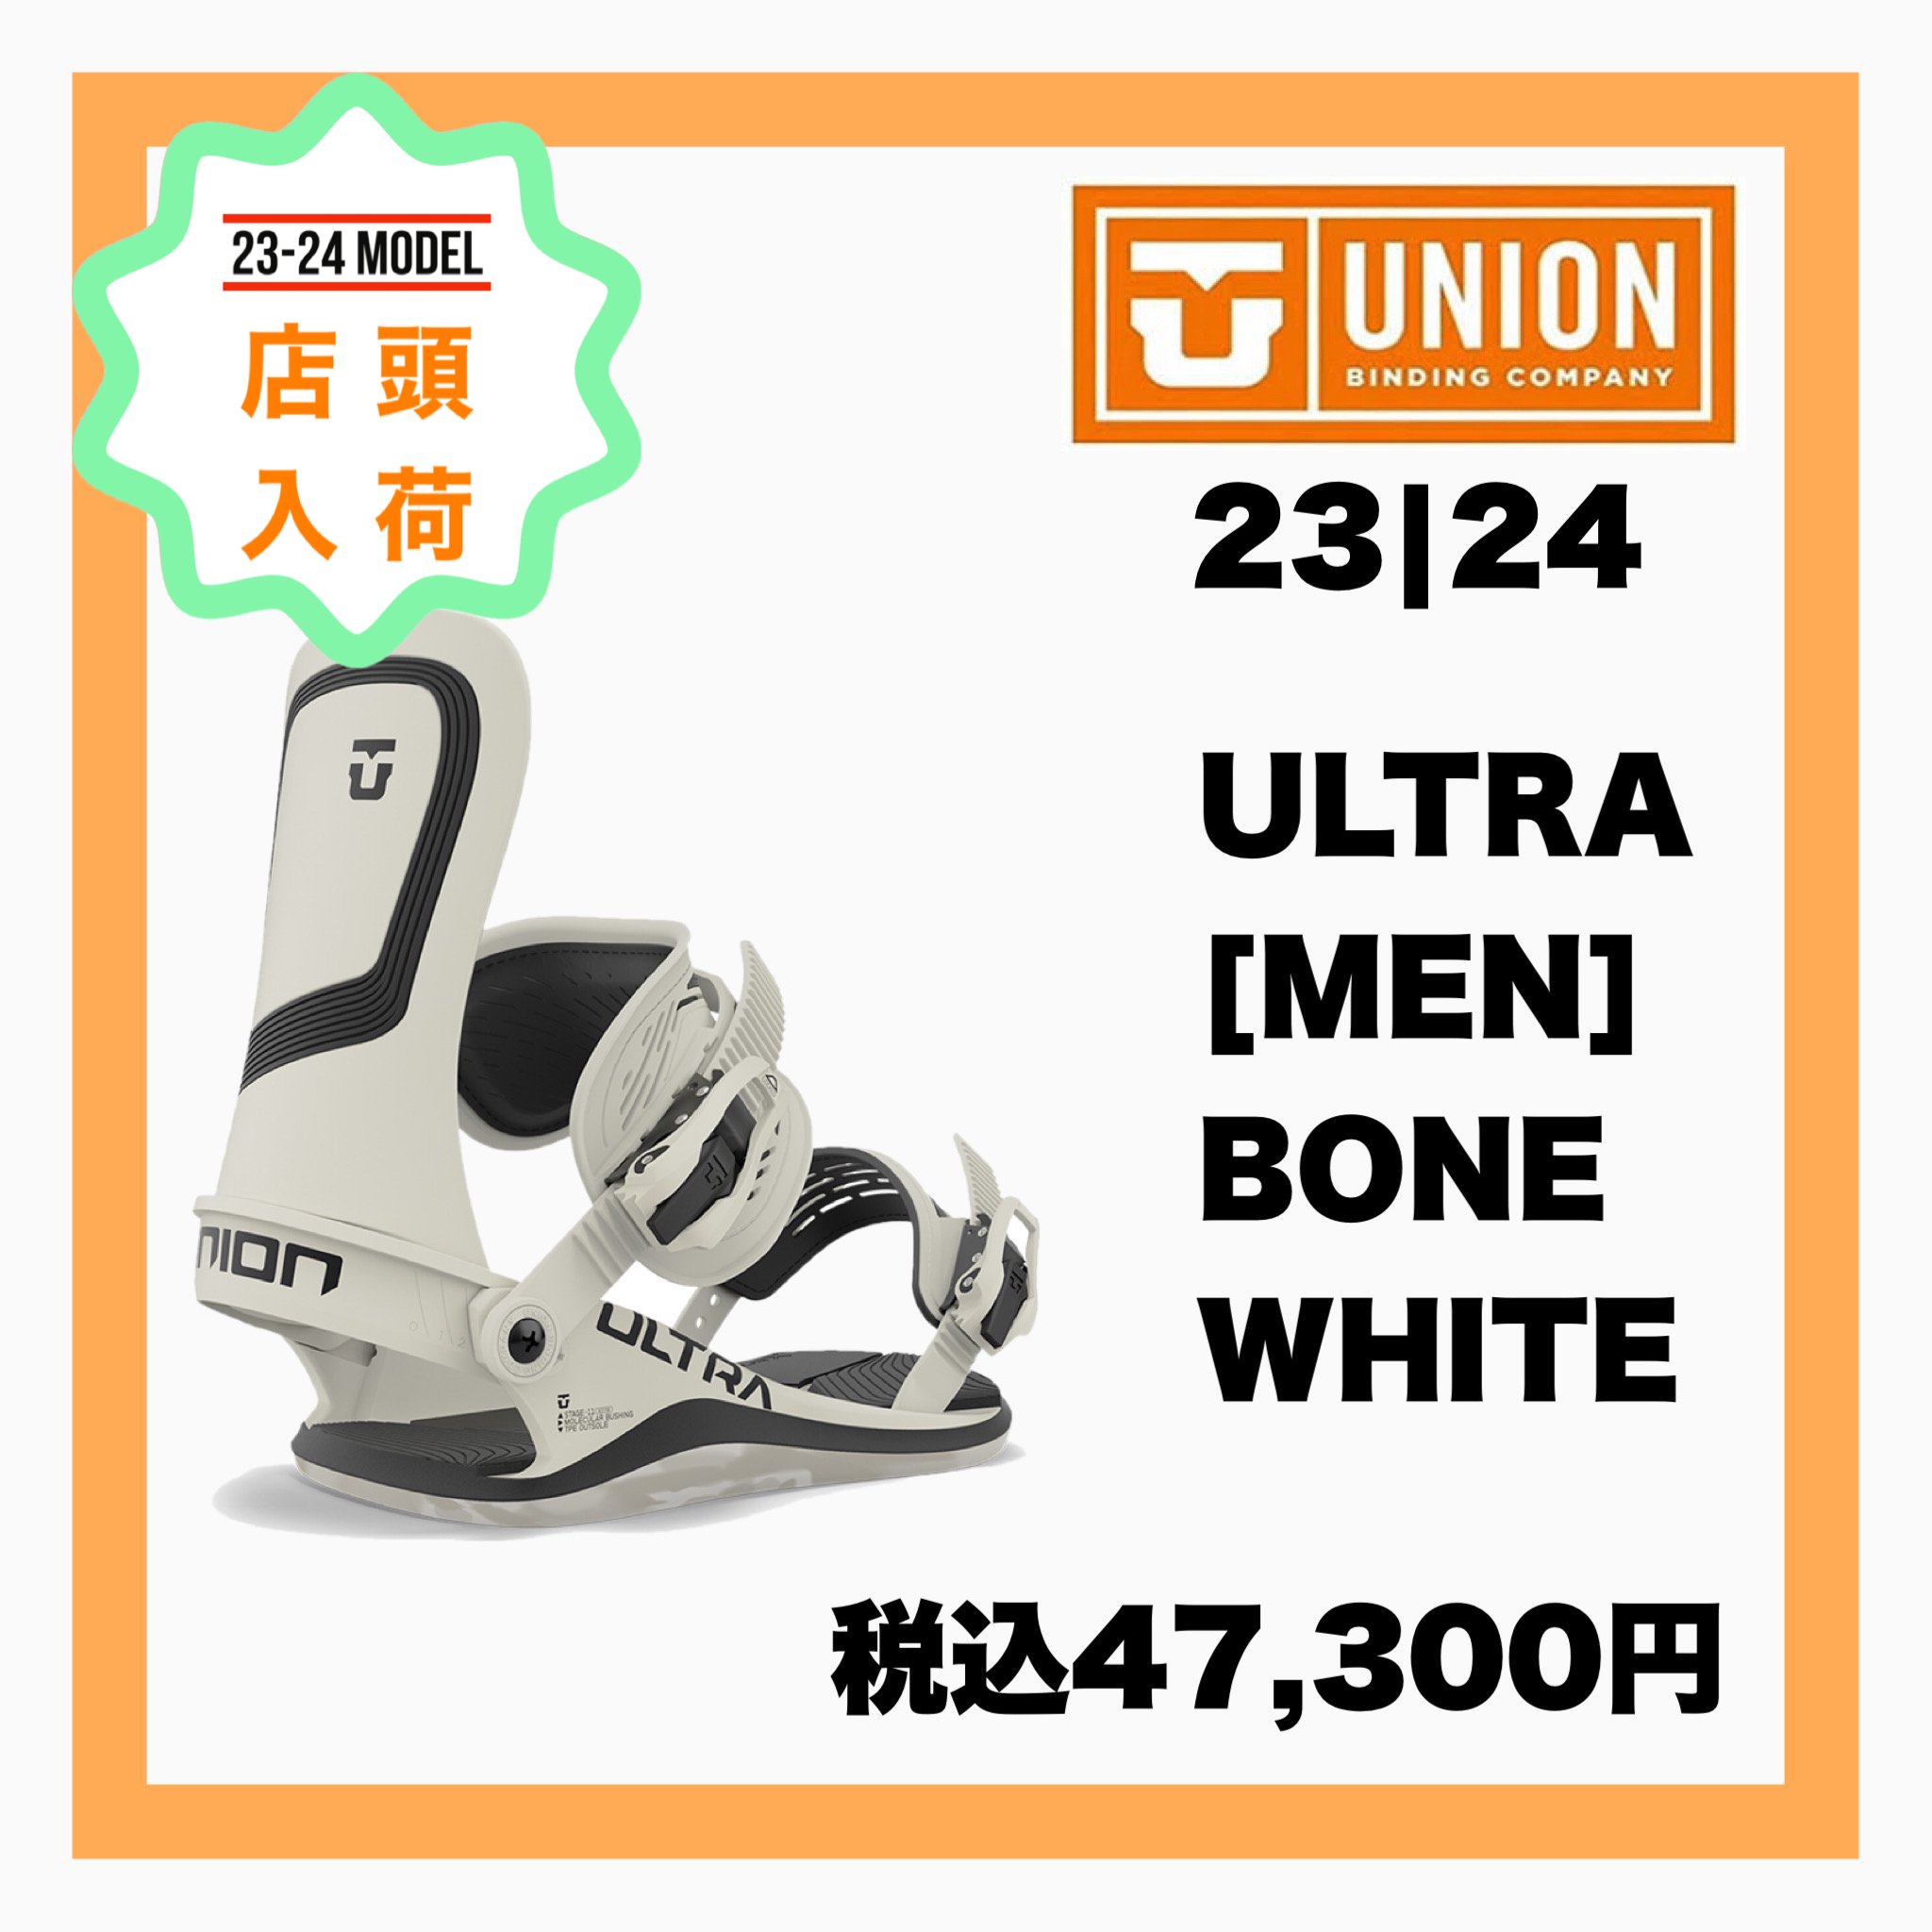 2023-2024 UNION 【 ULTRA [MEN] BONE WHITE】 - JOINT HOUSE